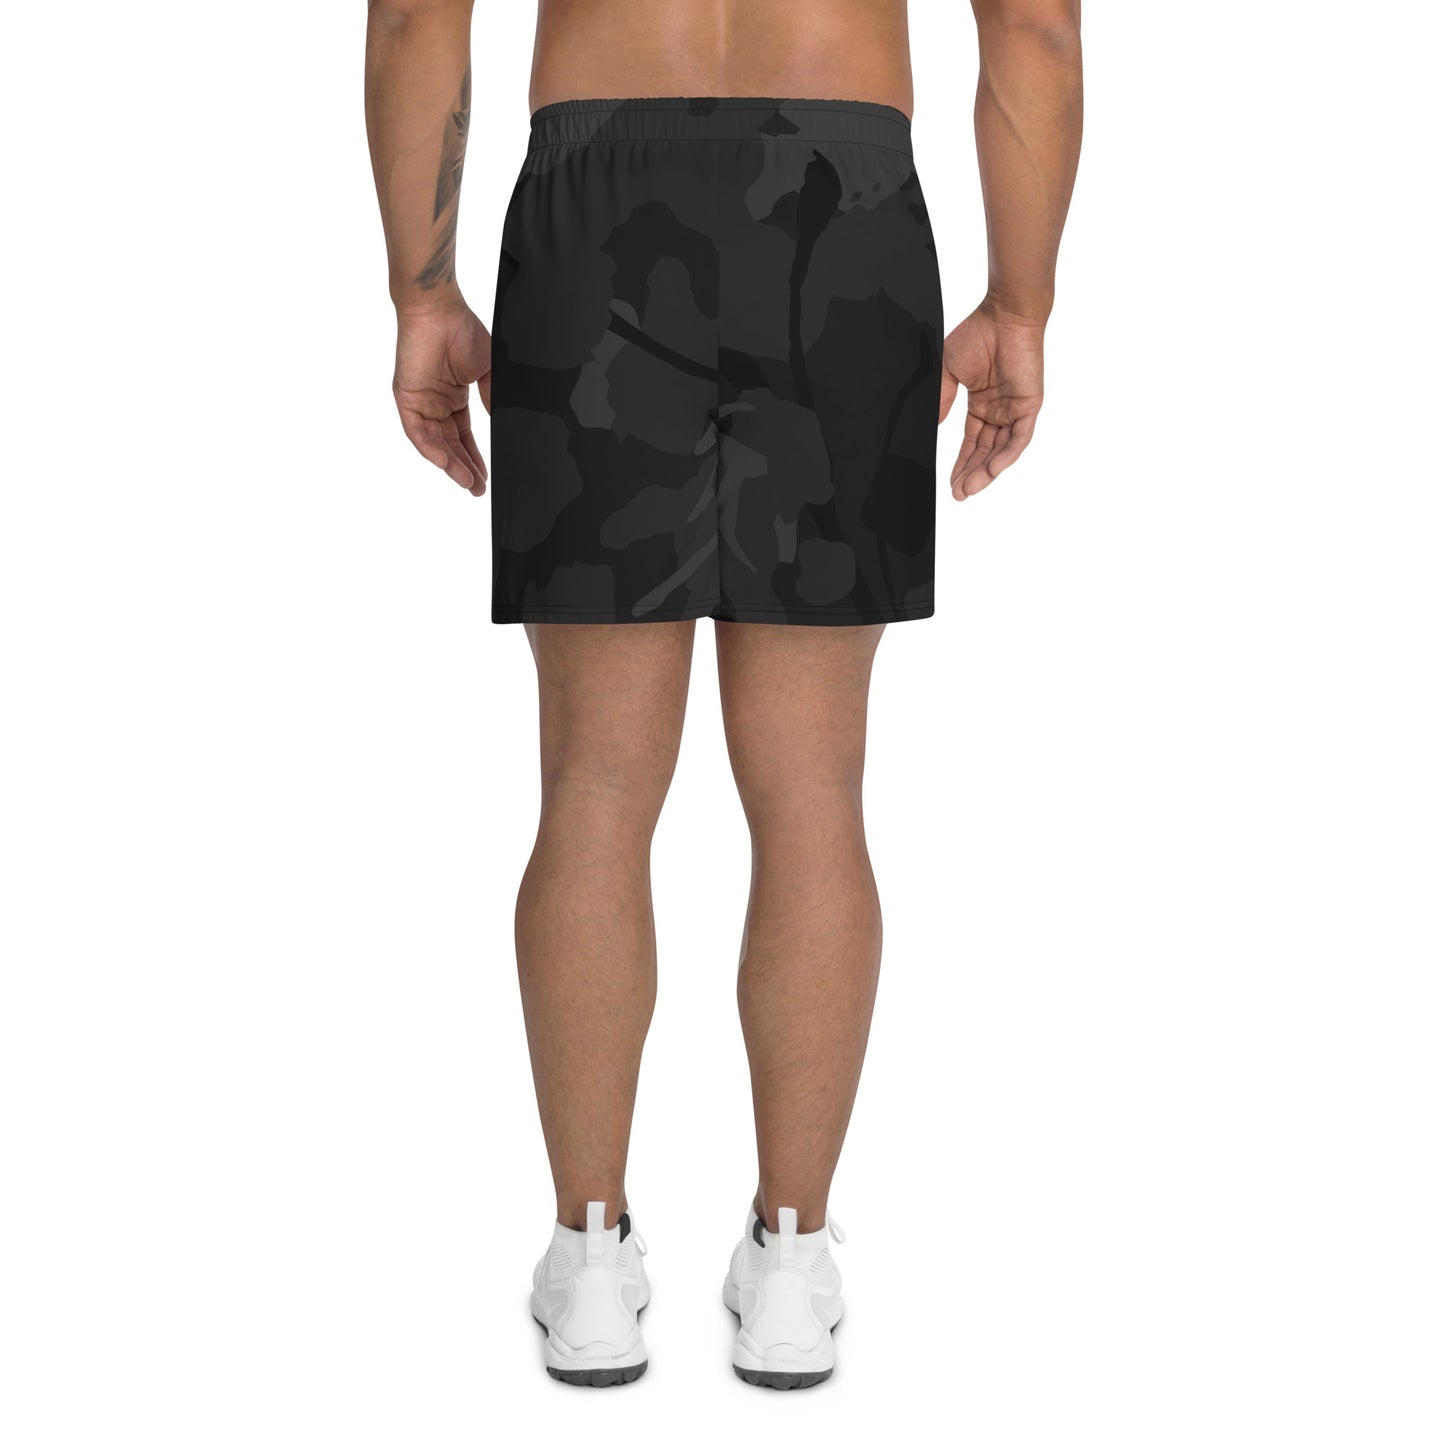 Men's Athletic Long Shorts